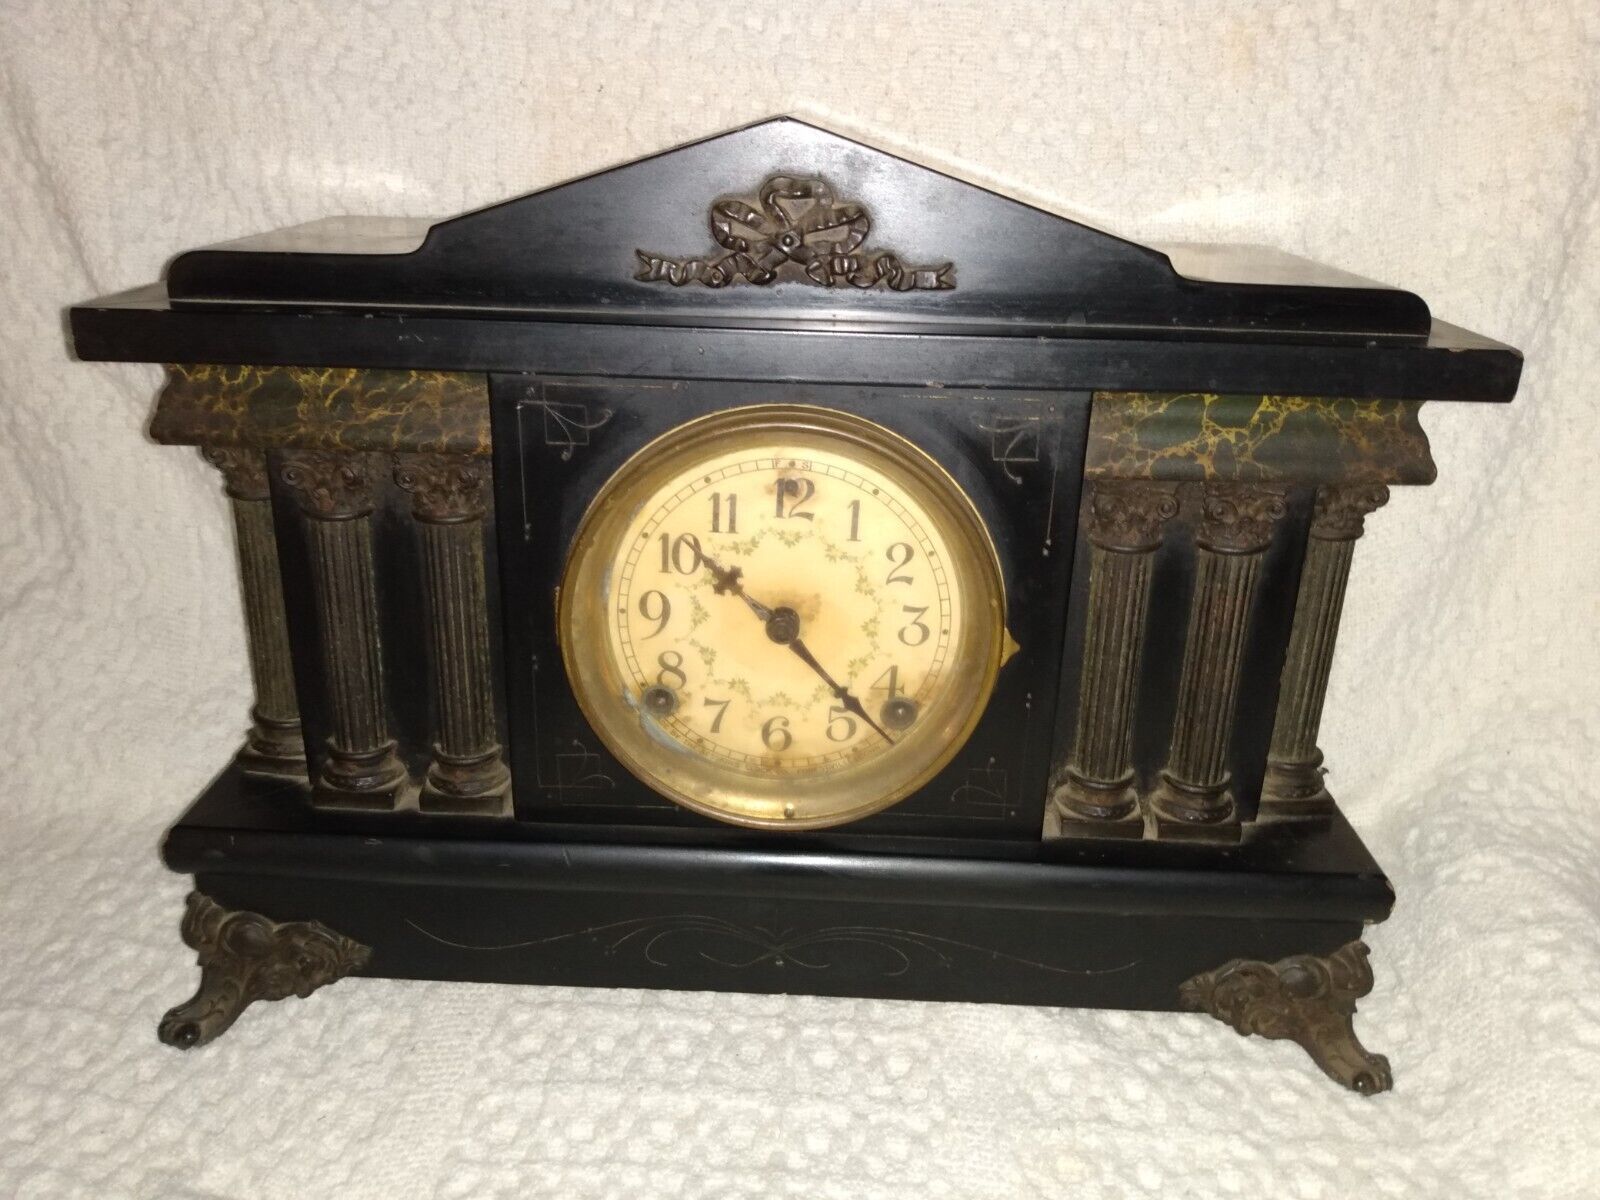 Antique Sessions Mantle Clock